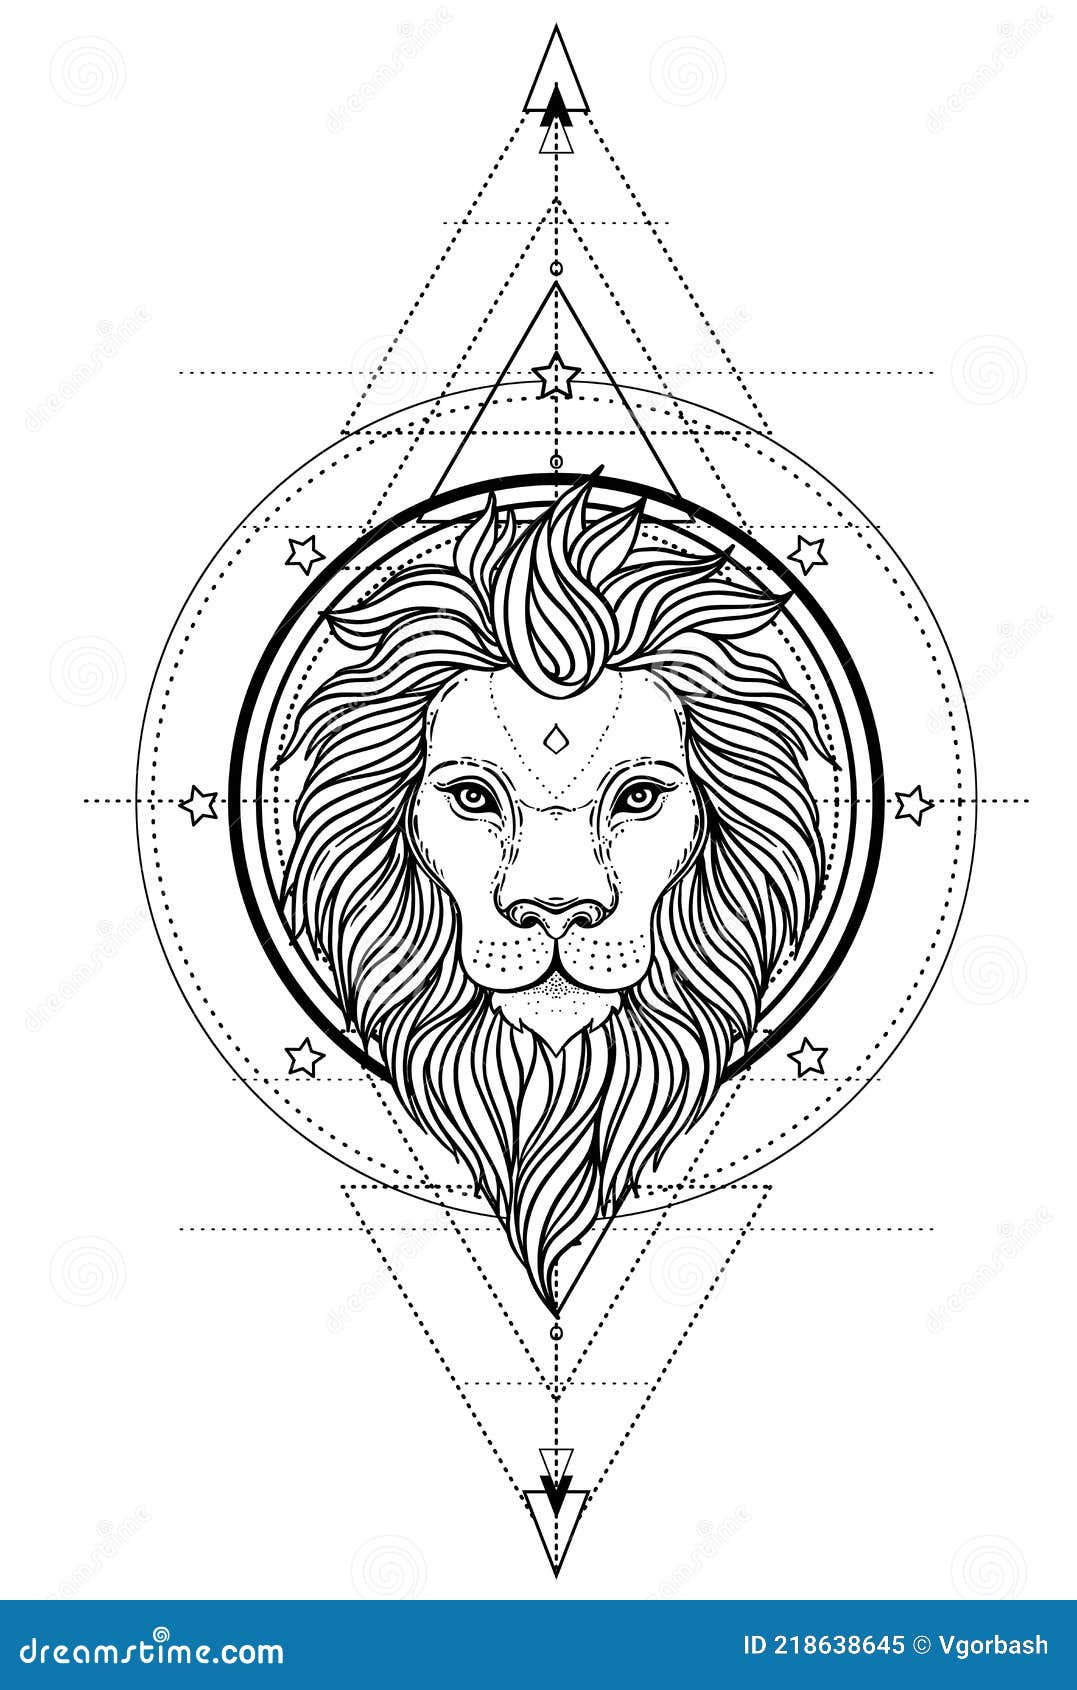 add a tatto lions